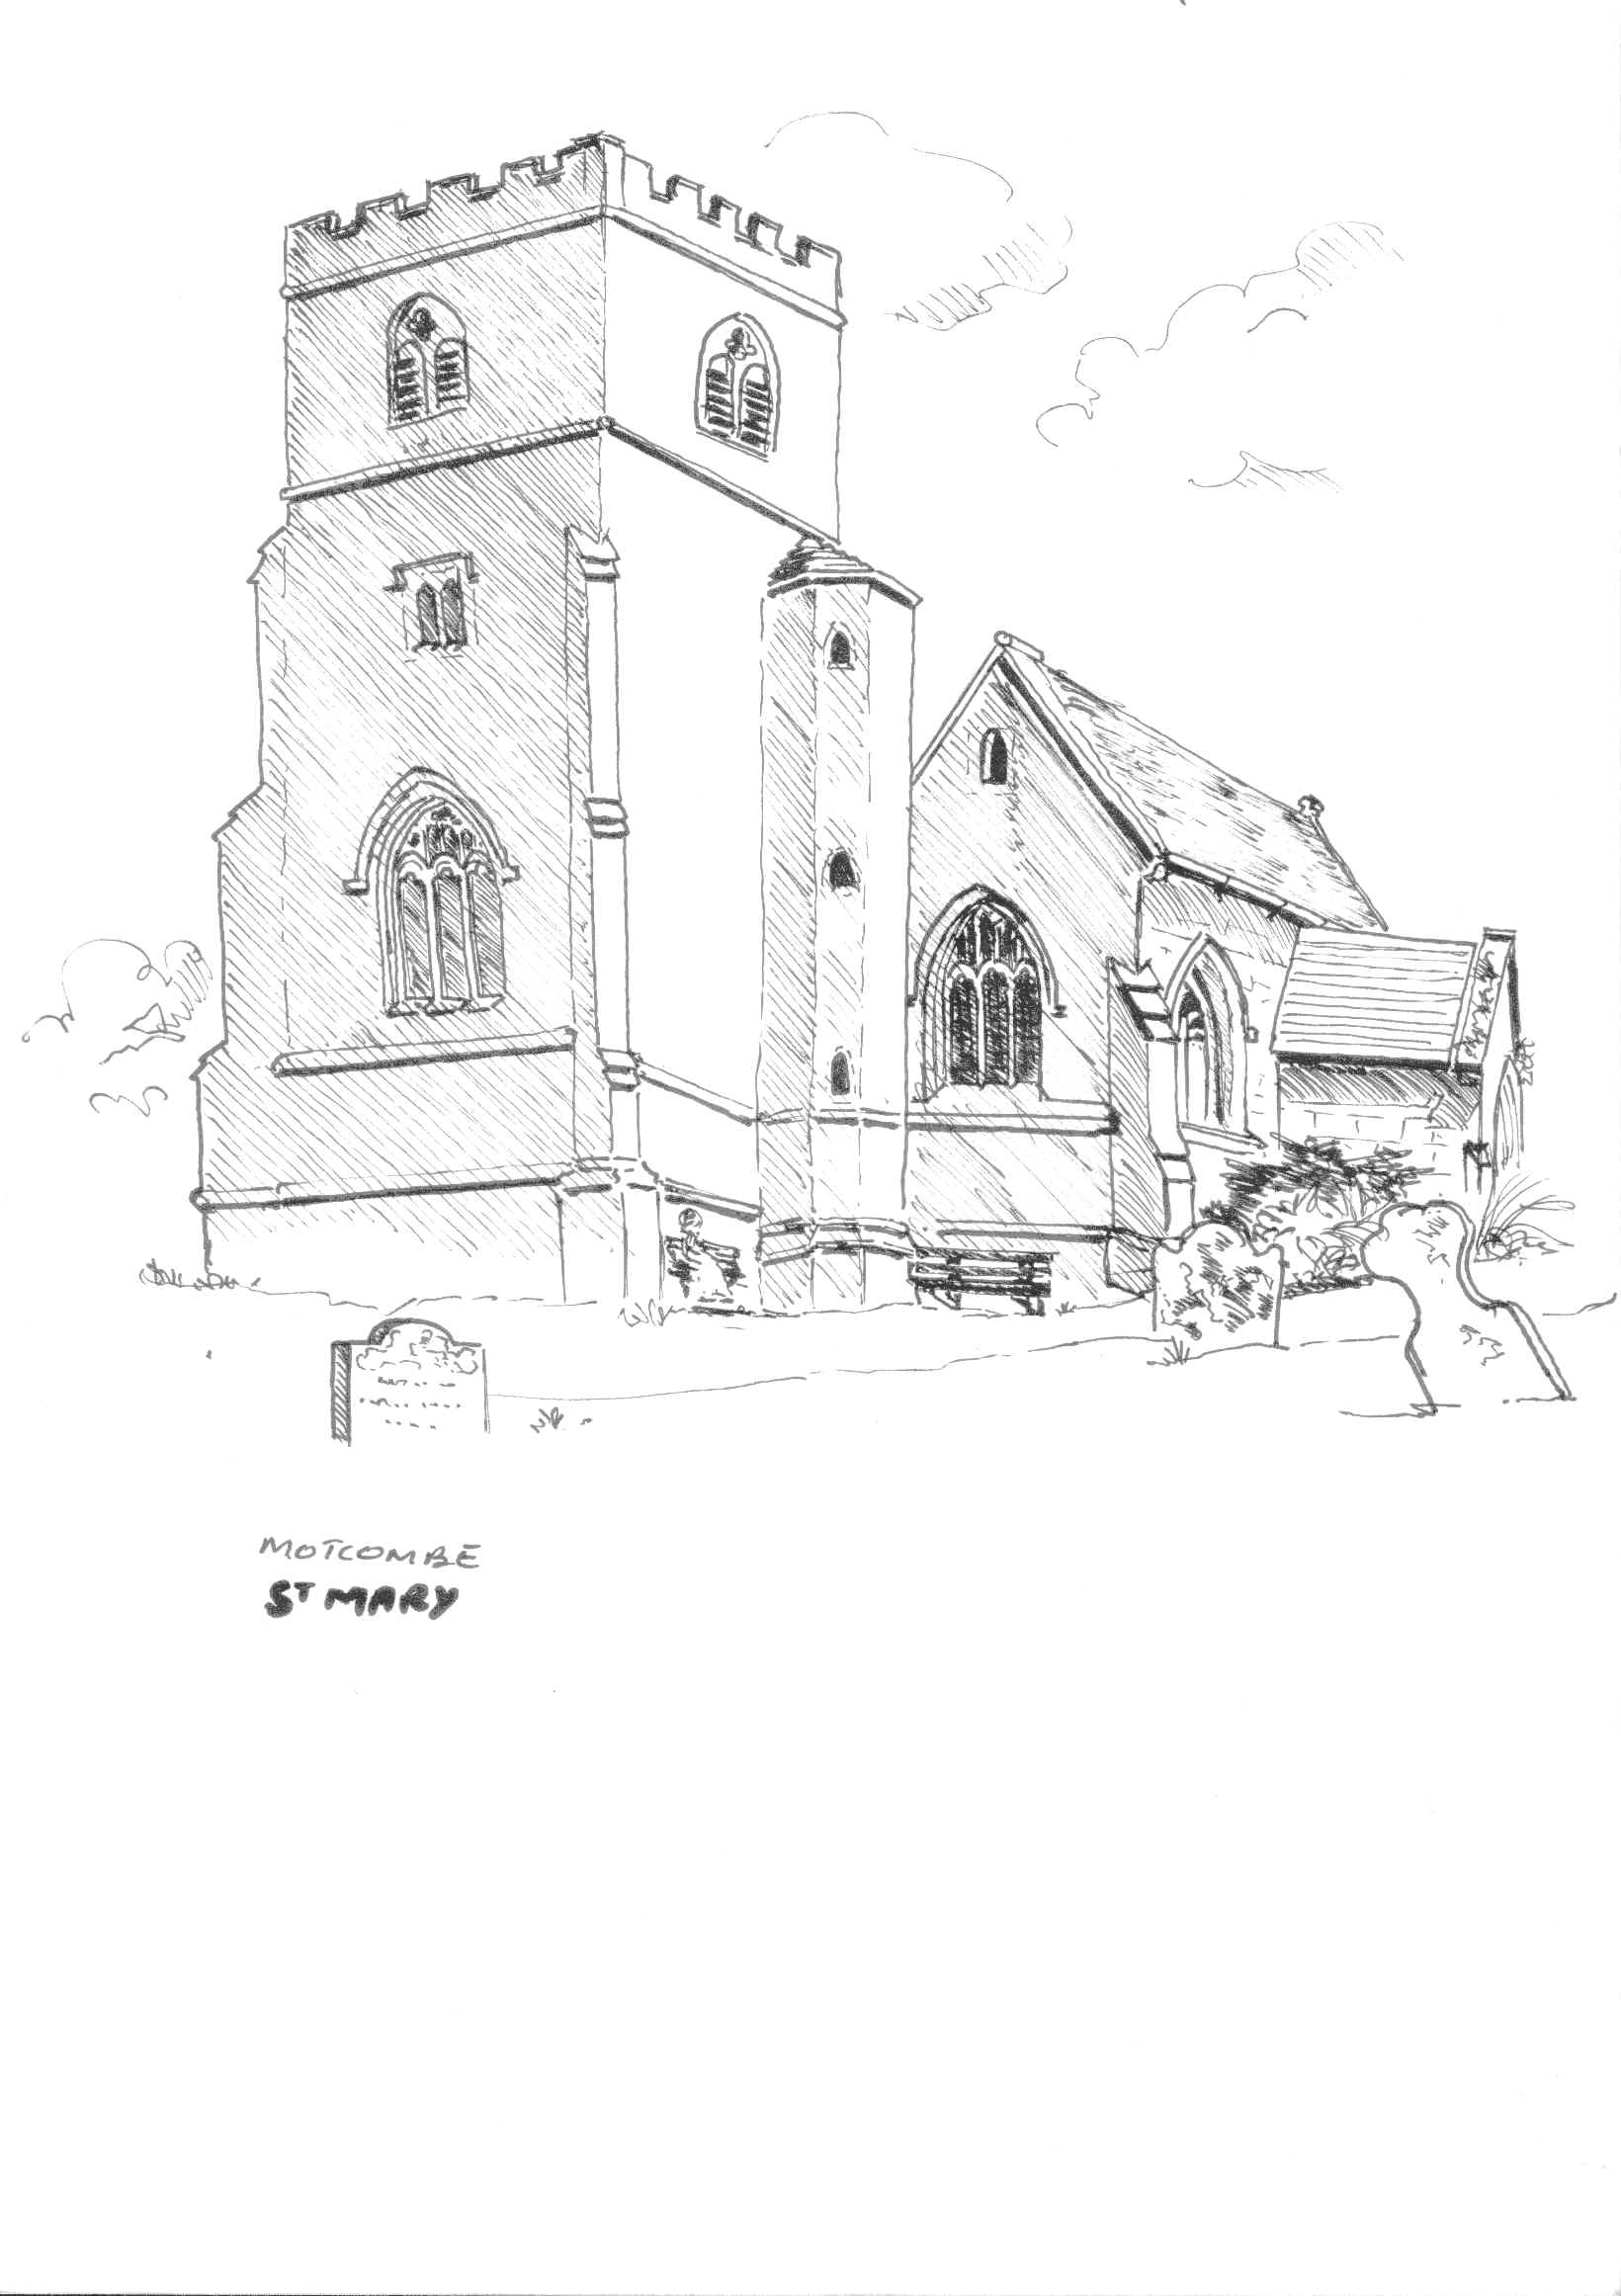 Motcombe church